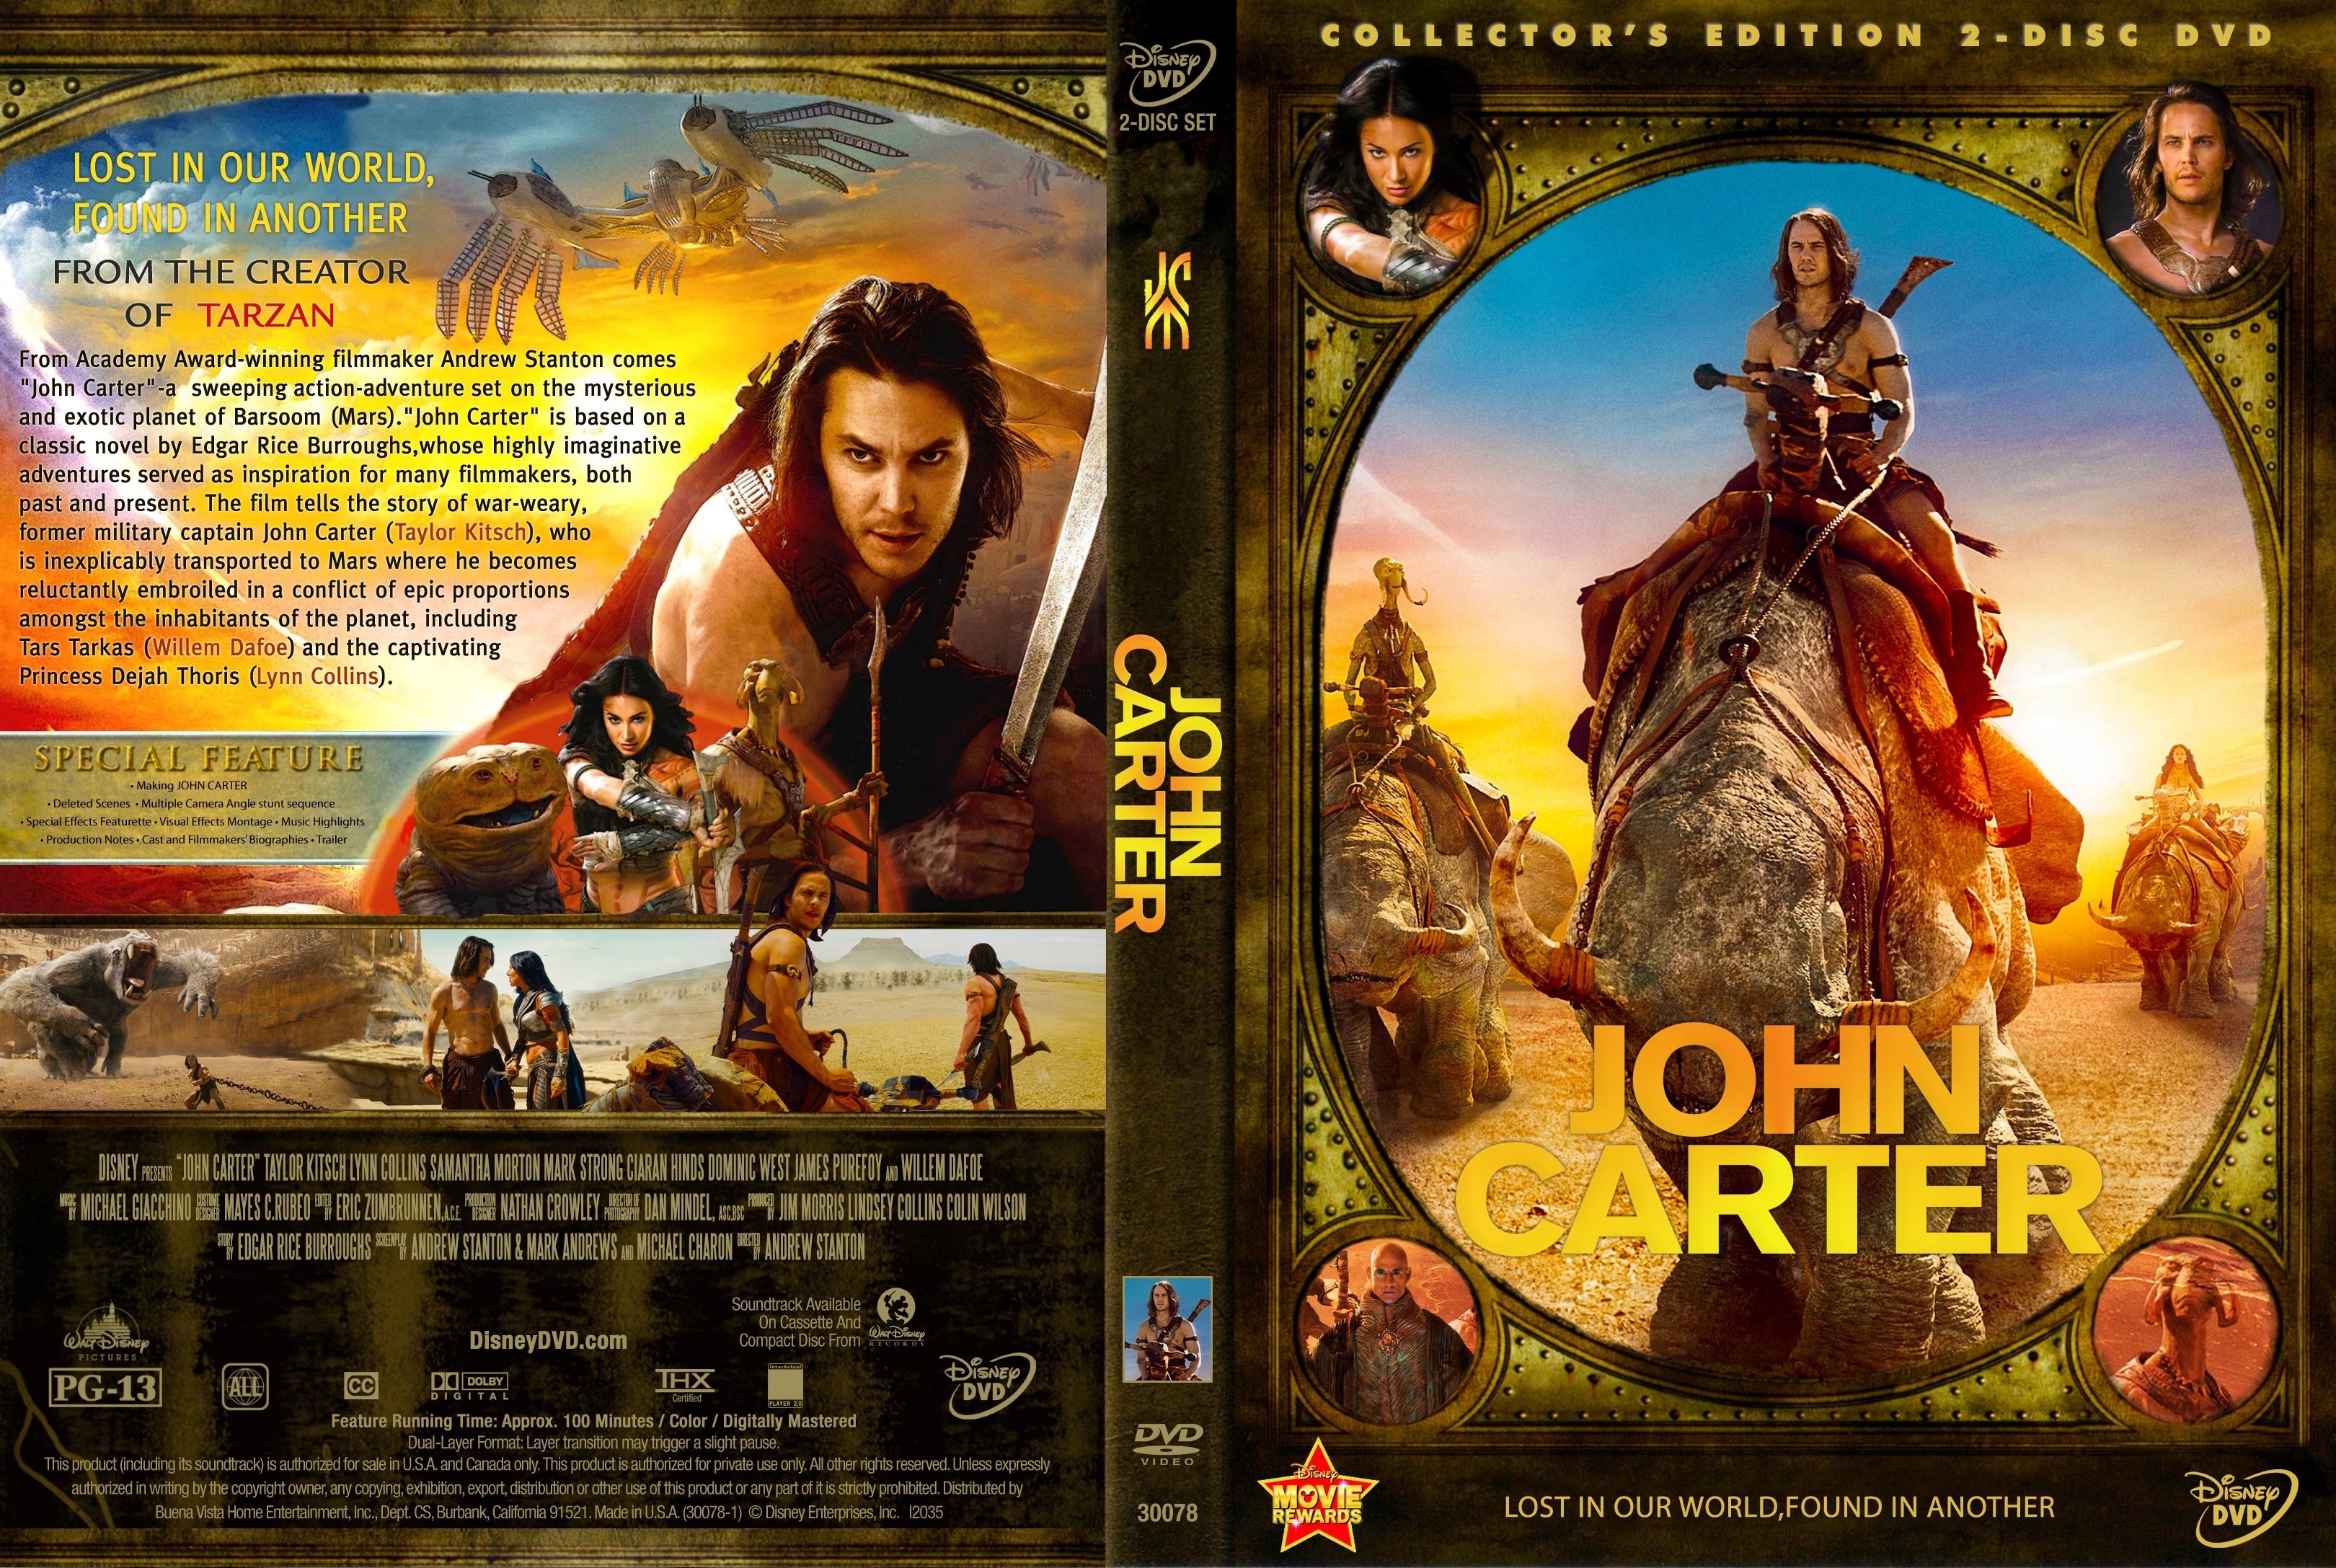 2012 обложка. Джон Картер (2012) Blu ray Cover. Обложка для двд John Carter. Джон Картер 2012 Постер. Обложка к двд Джон Картер.